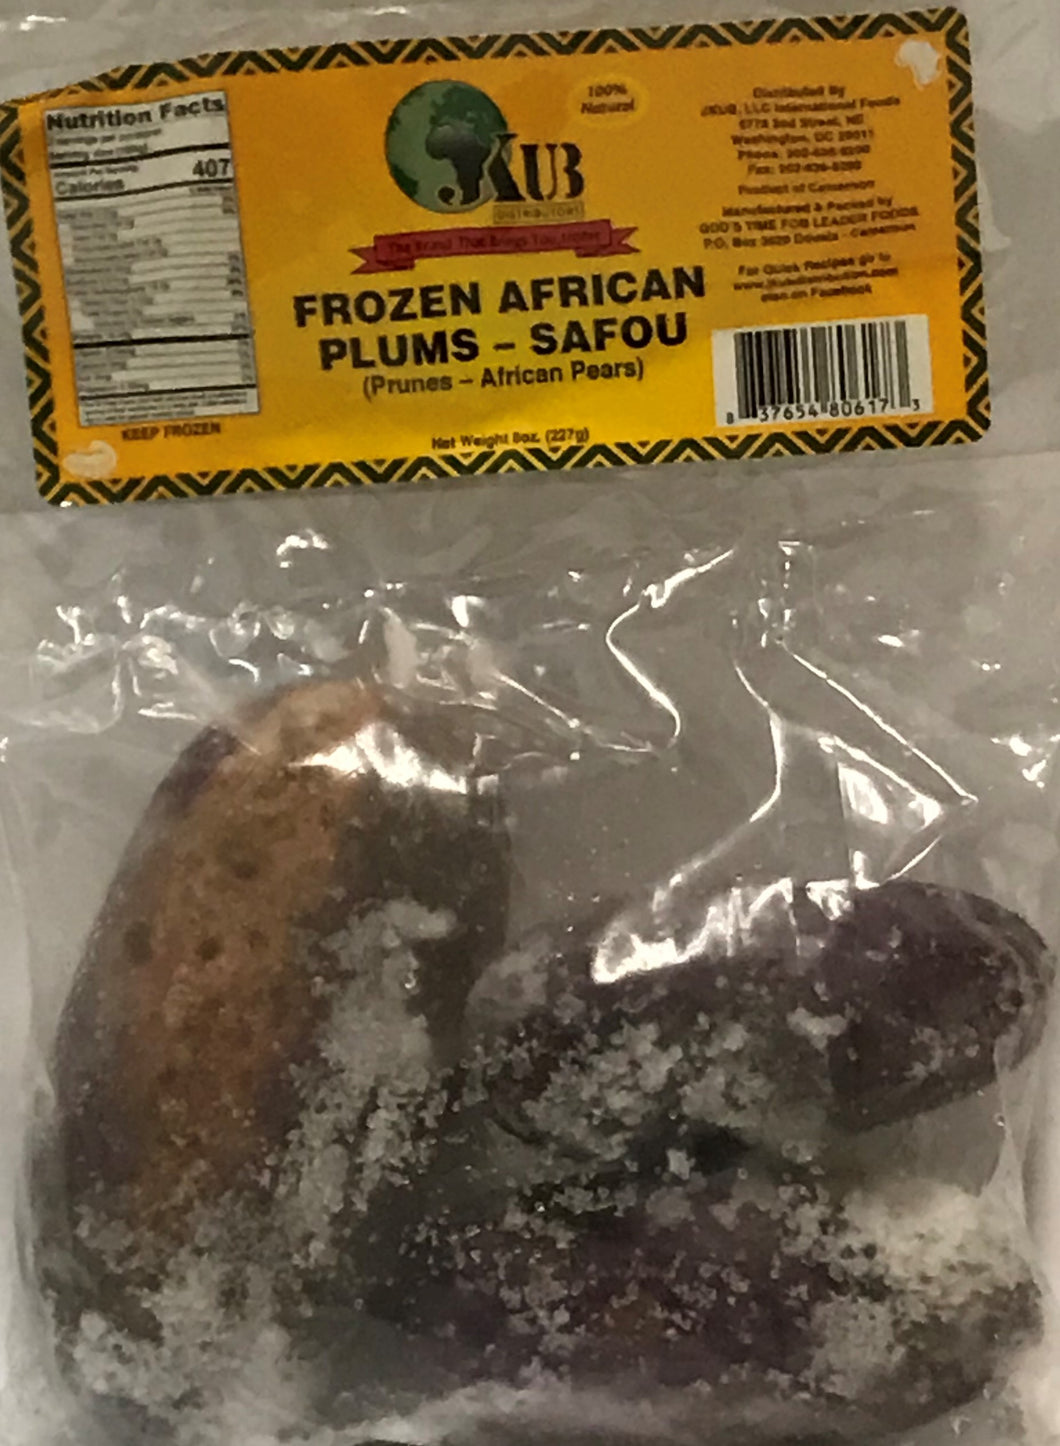 JKUB Frozen African Plum 8oz